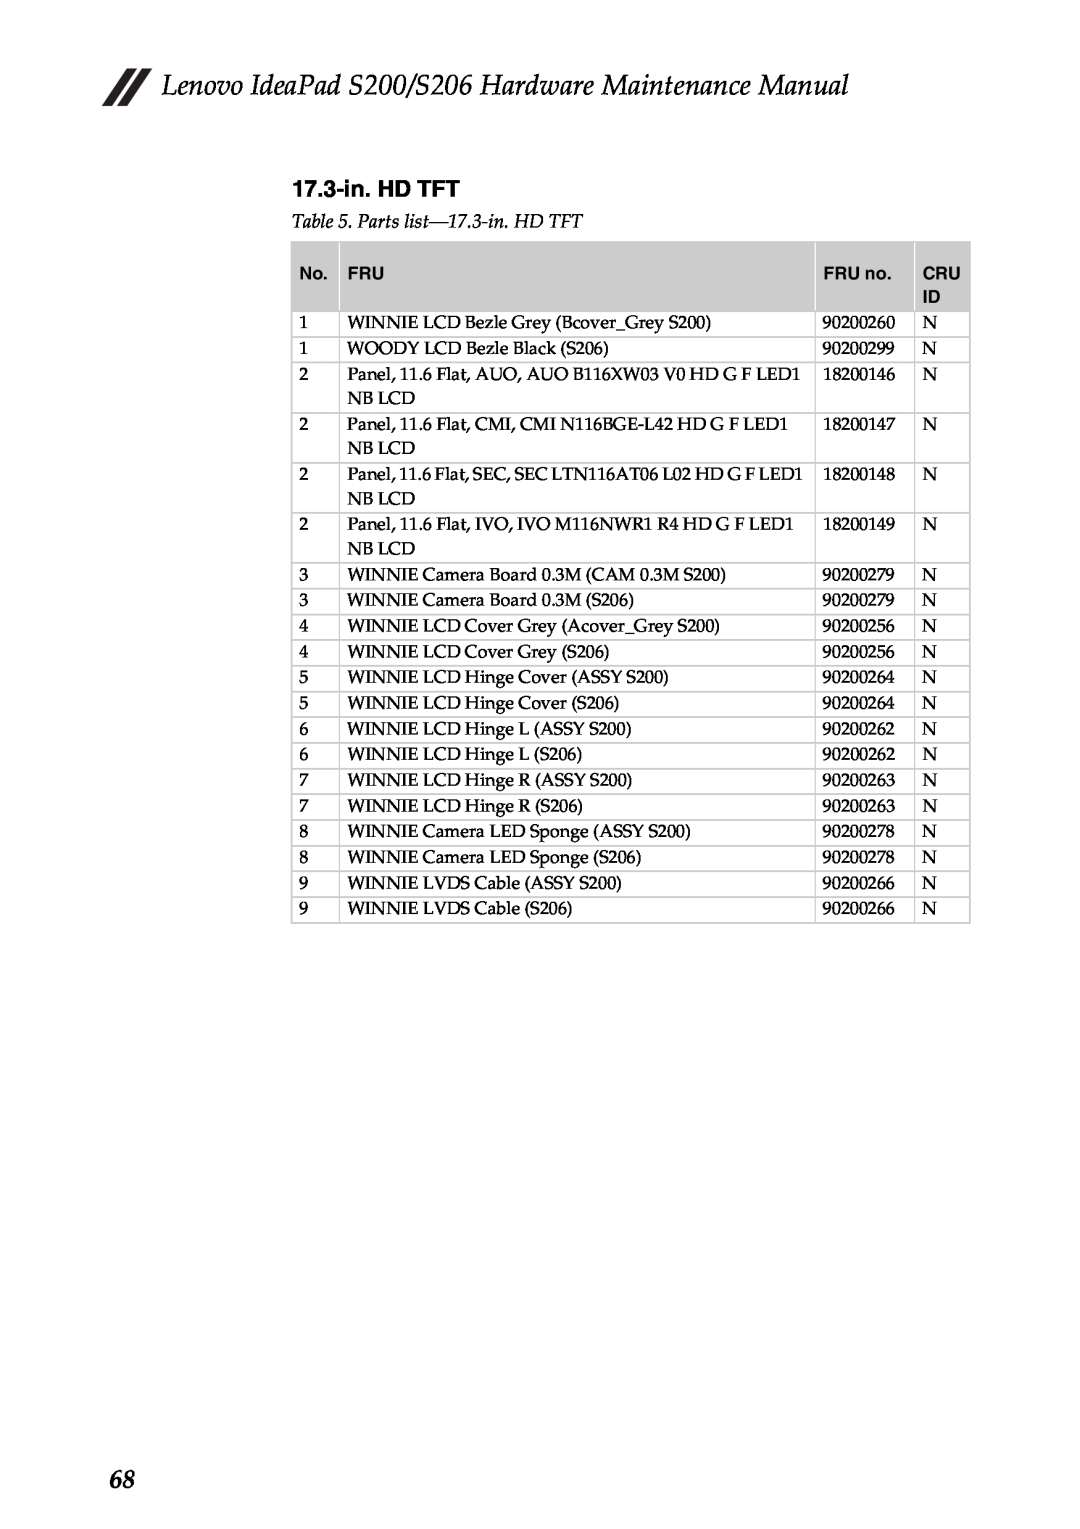 Lenovo S206, S200 manual Parts list-17.3-in.HD TFT, FRU no 